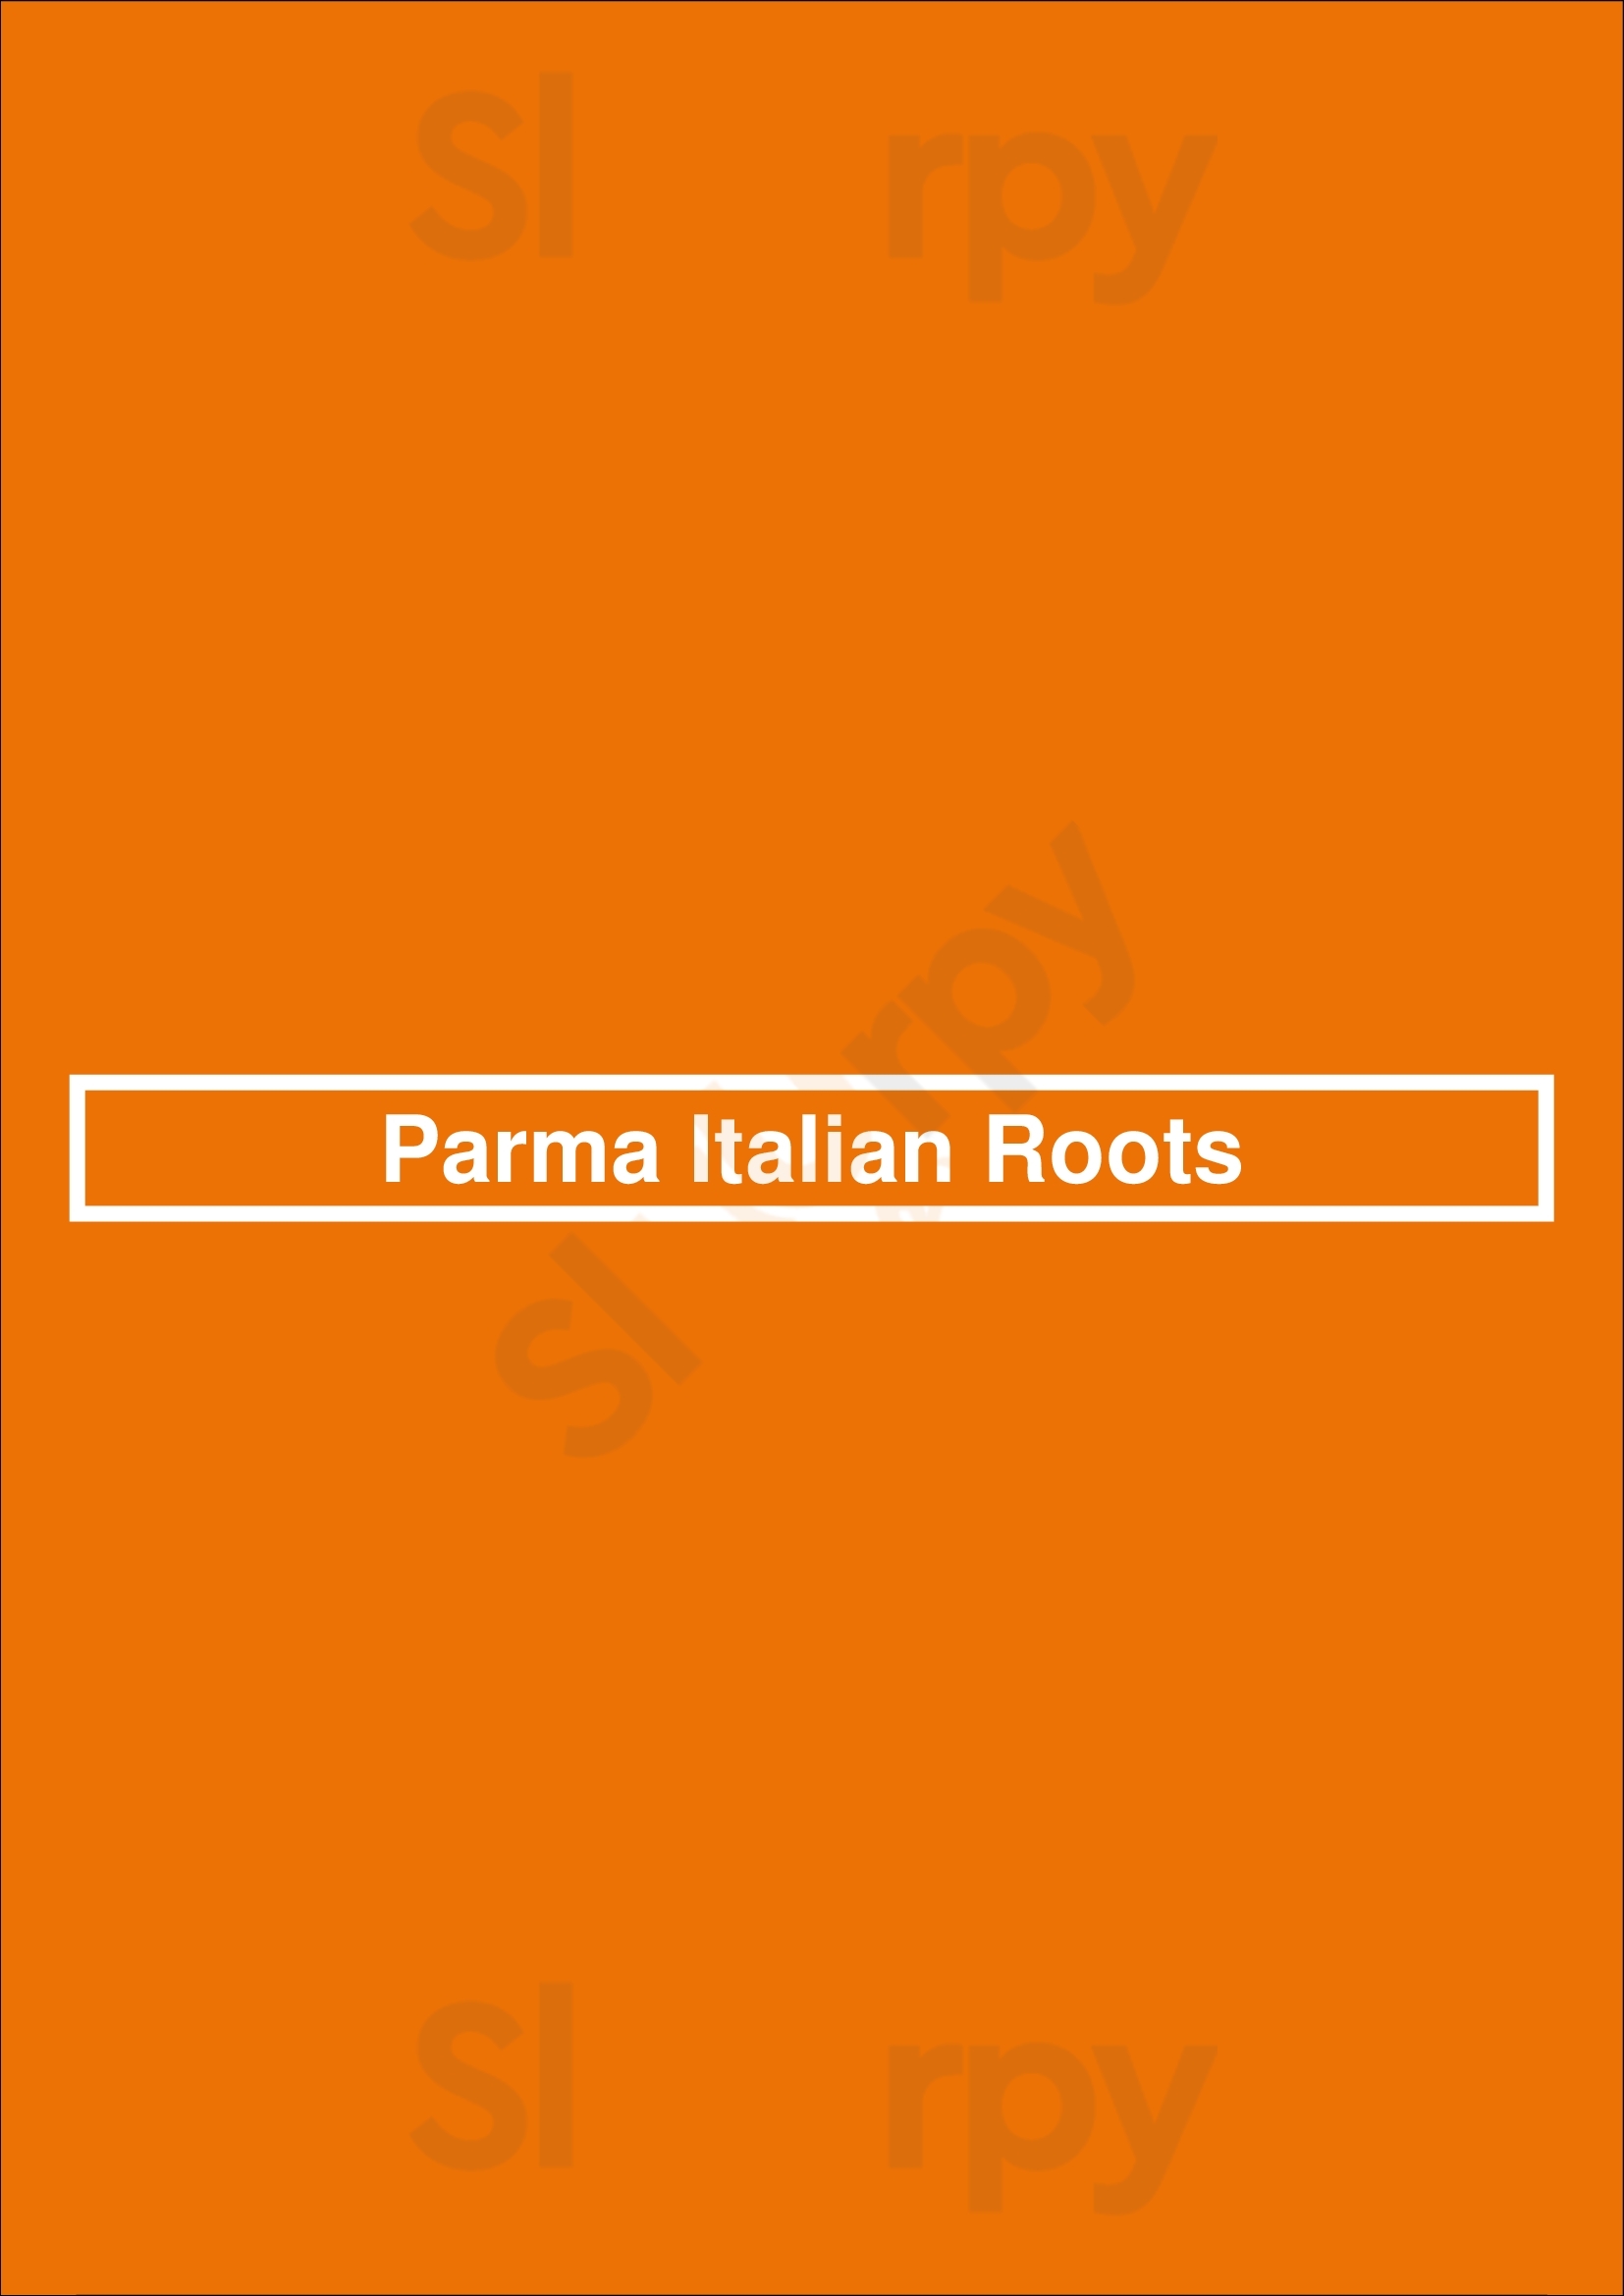 Parma Italian Roots Scottsdale Menu - 1